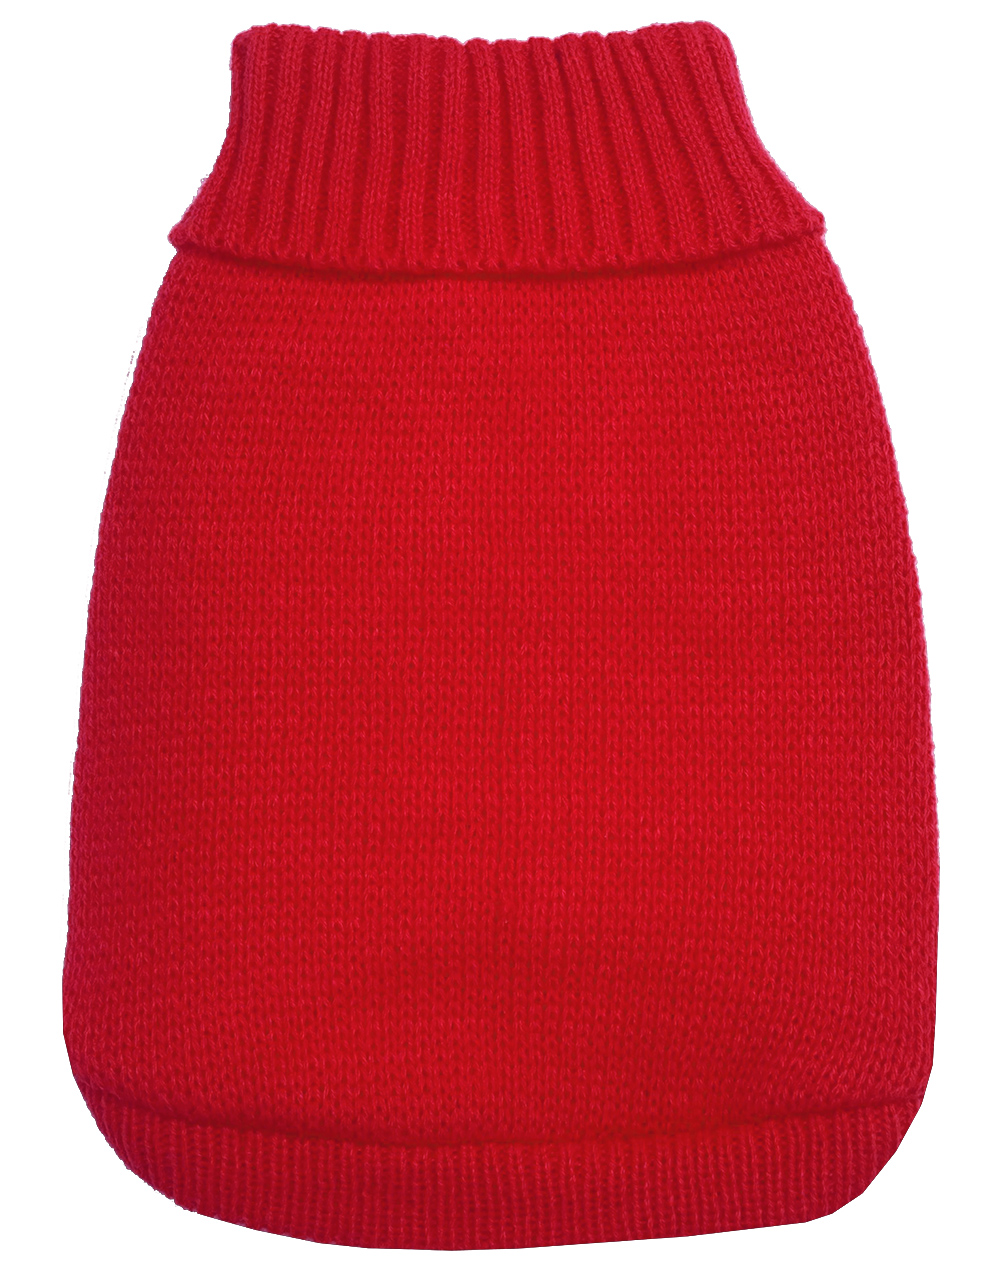 Knit Pet Sweater Red Size XS